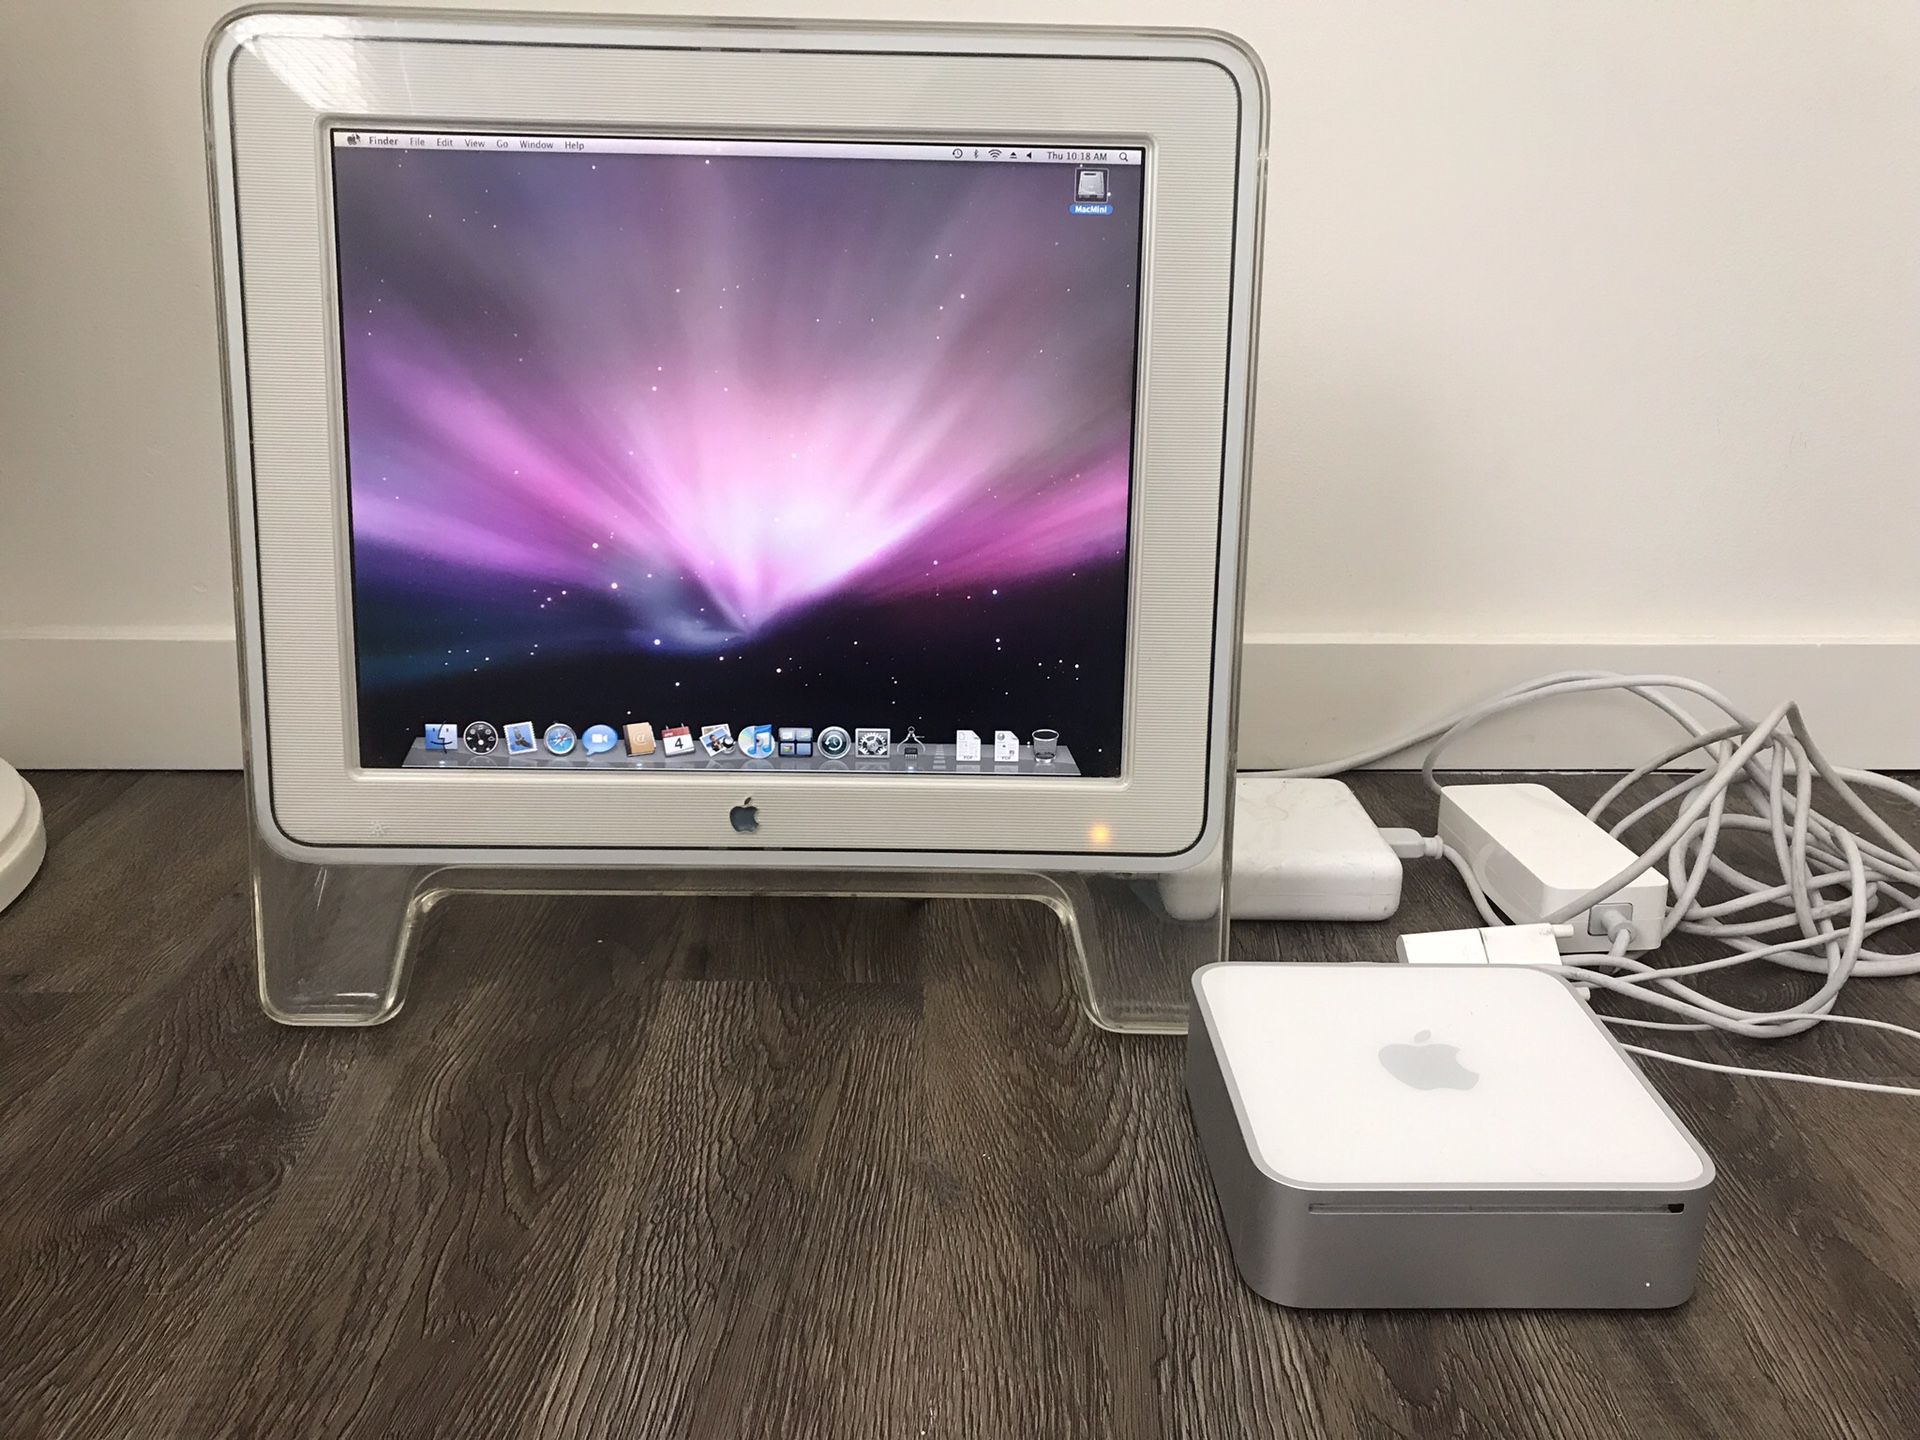 Apple Mac Mini A1283 Desktop-Core 2 Duo, 2.53GHz, 4GB, 298GB Bundled w Apple Studio Display Monitor M7649 LCD Flat Panel 17” Color